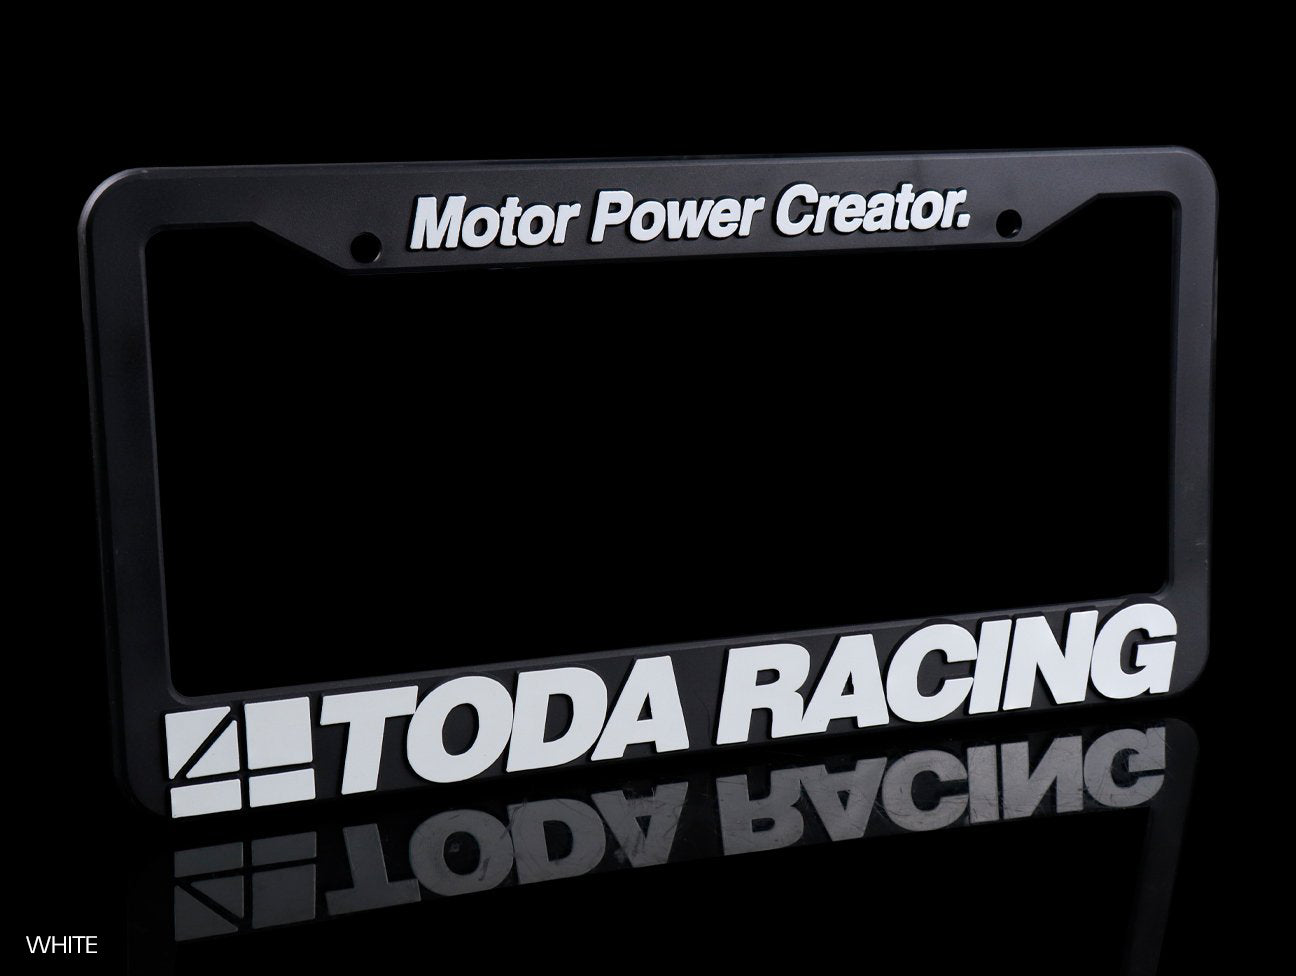 Toda Racing License Plate Frame